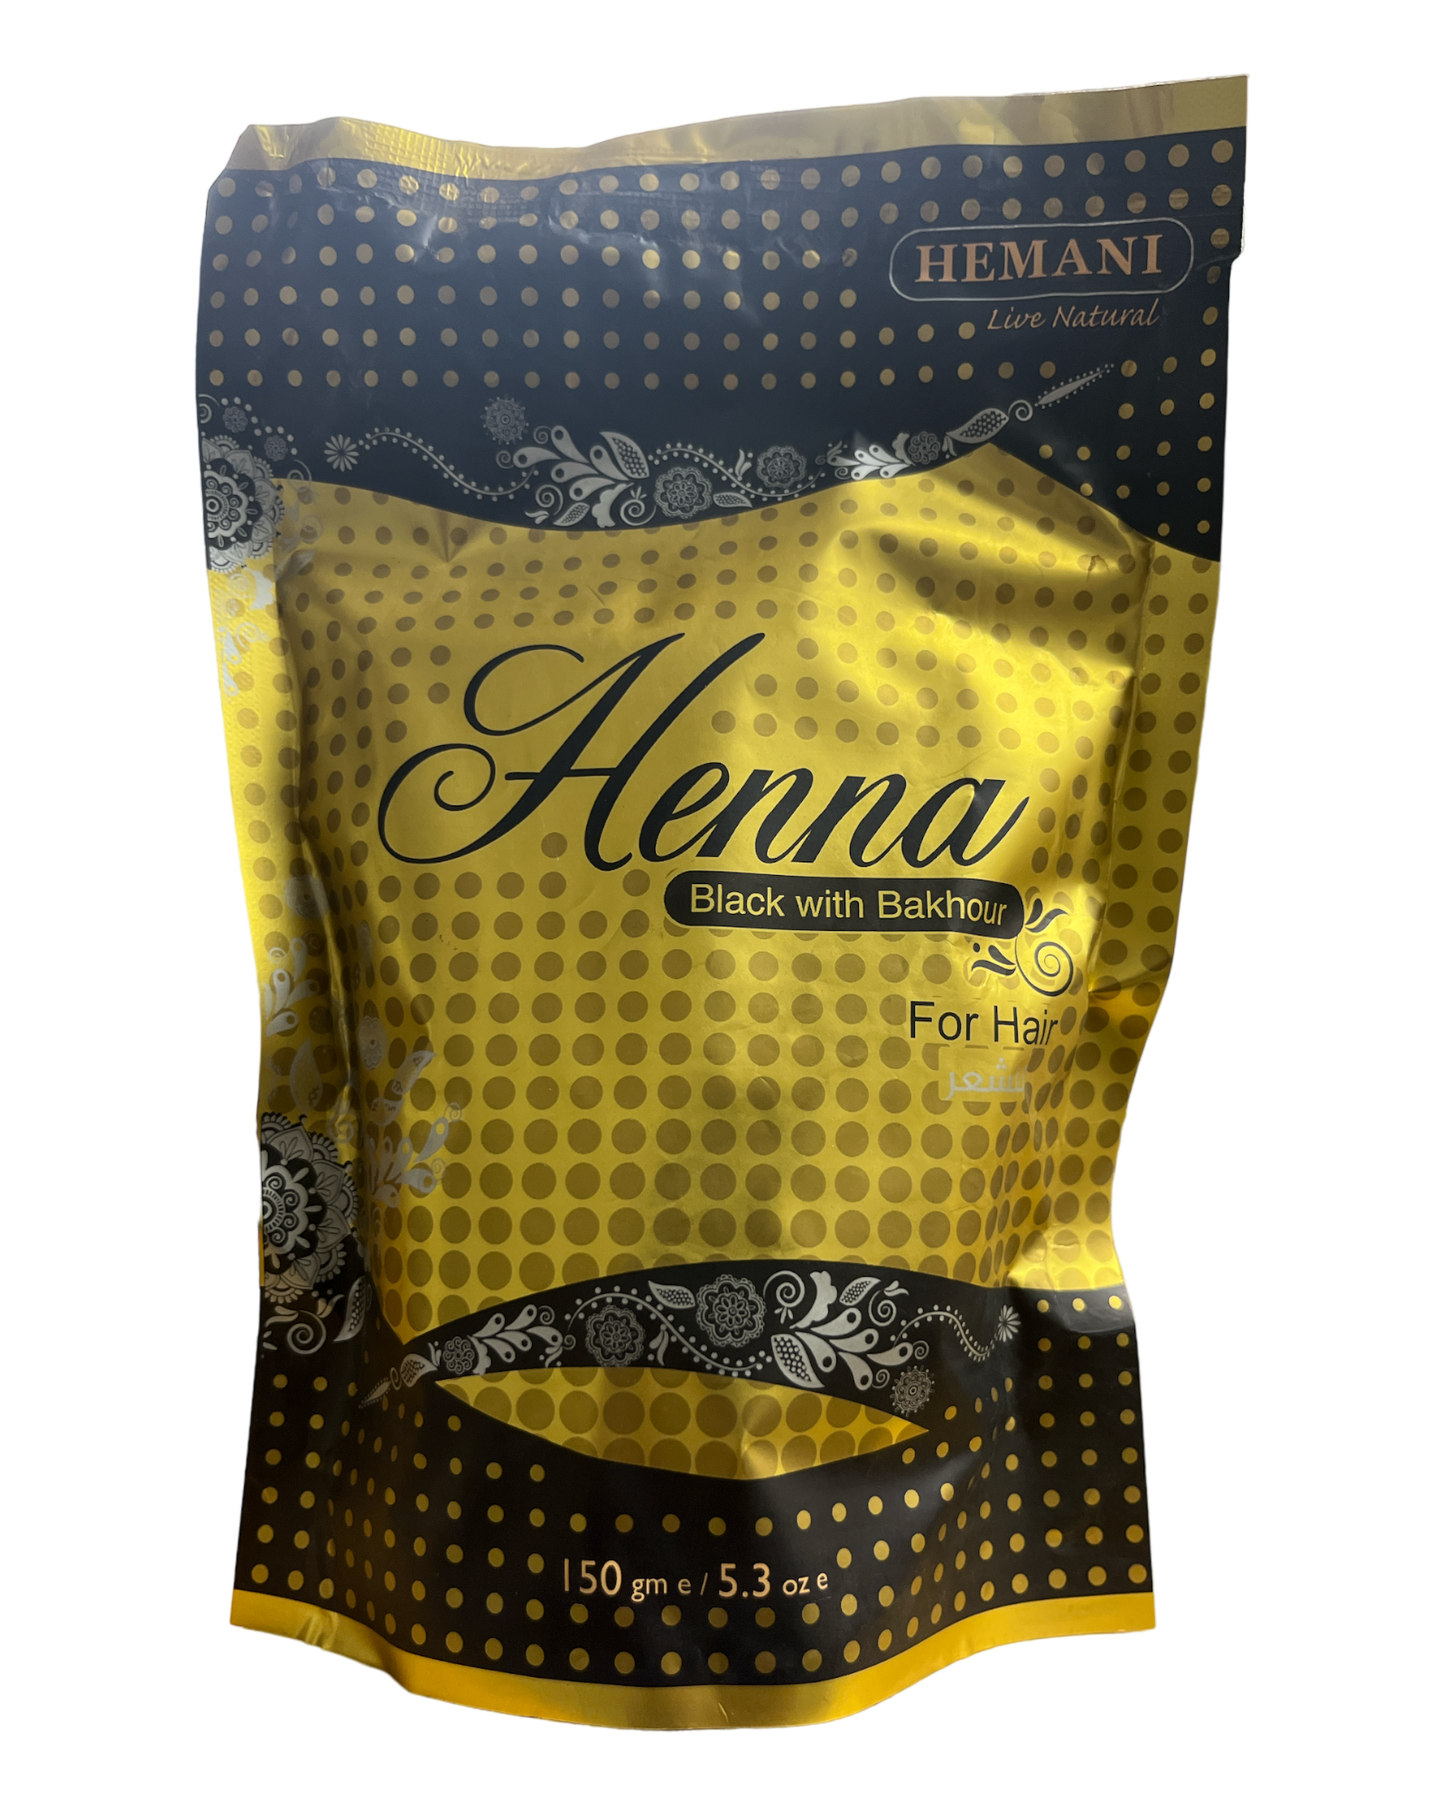 Hemani Black Henna Powder with Bakhour for Hair 150g